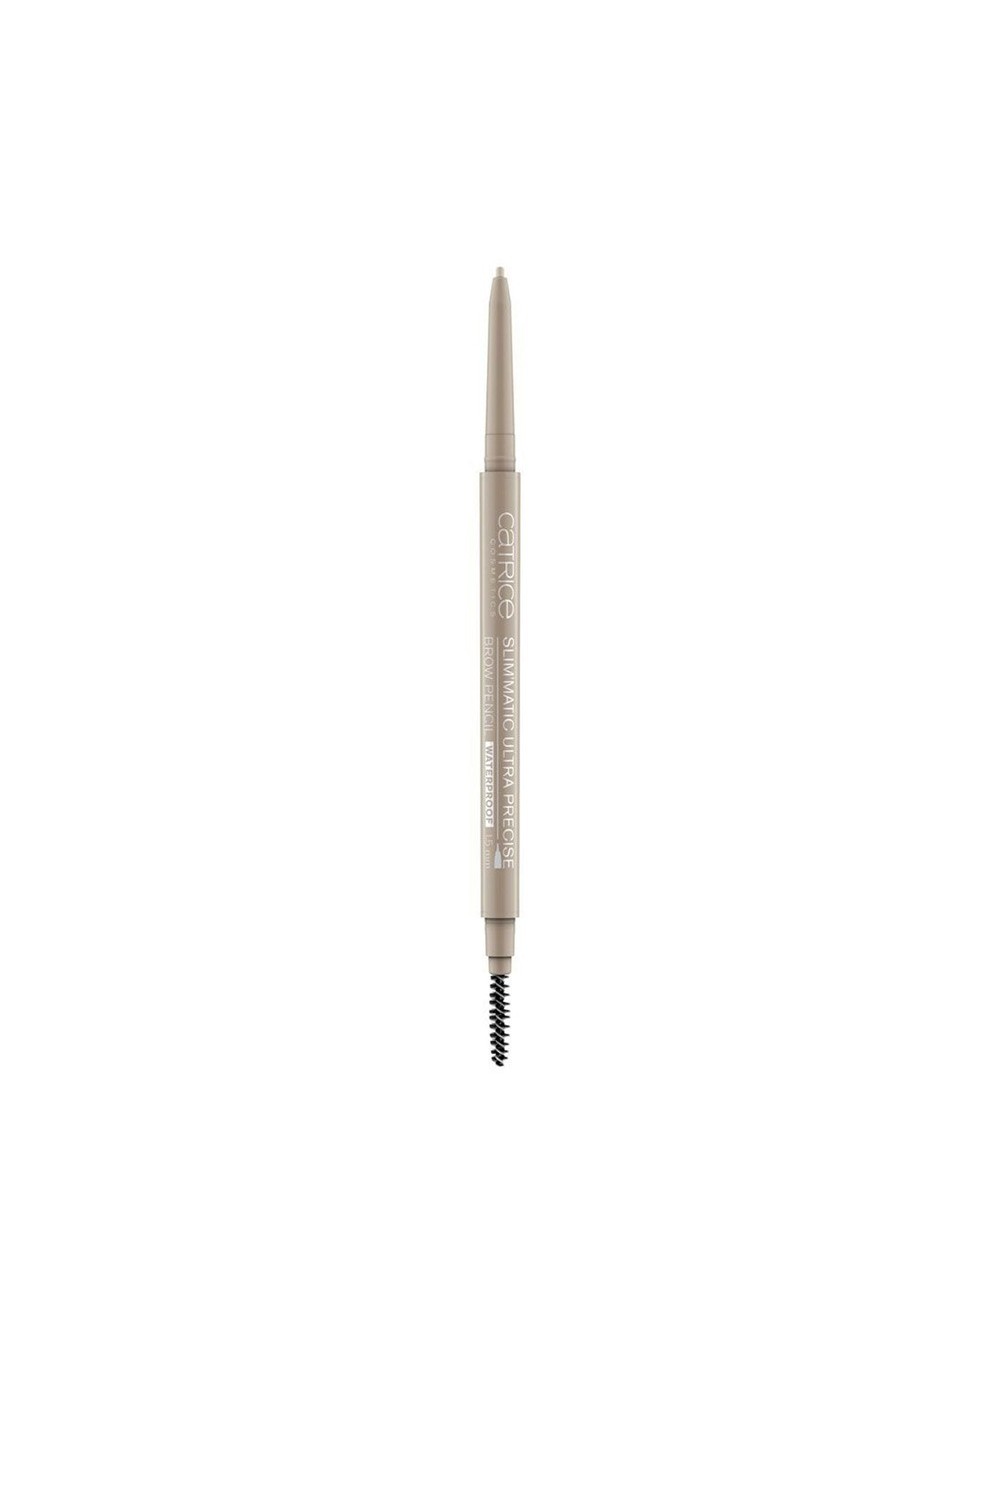 Catrice Slim'matic Ultra Precise Brow Pencil Wp 015-Ash Blonde